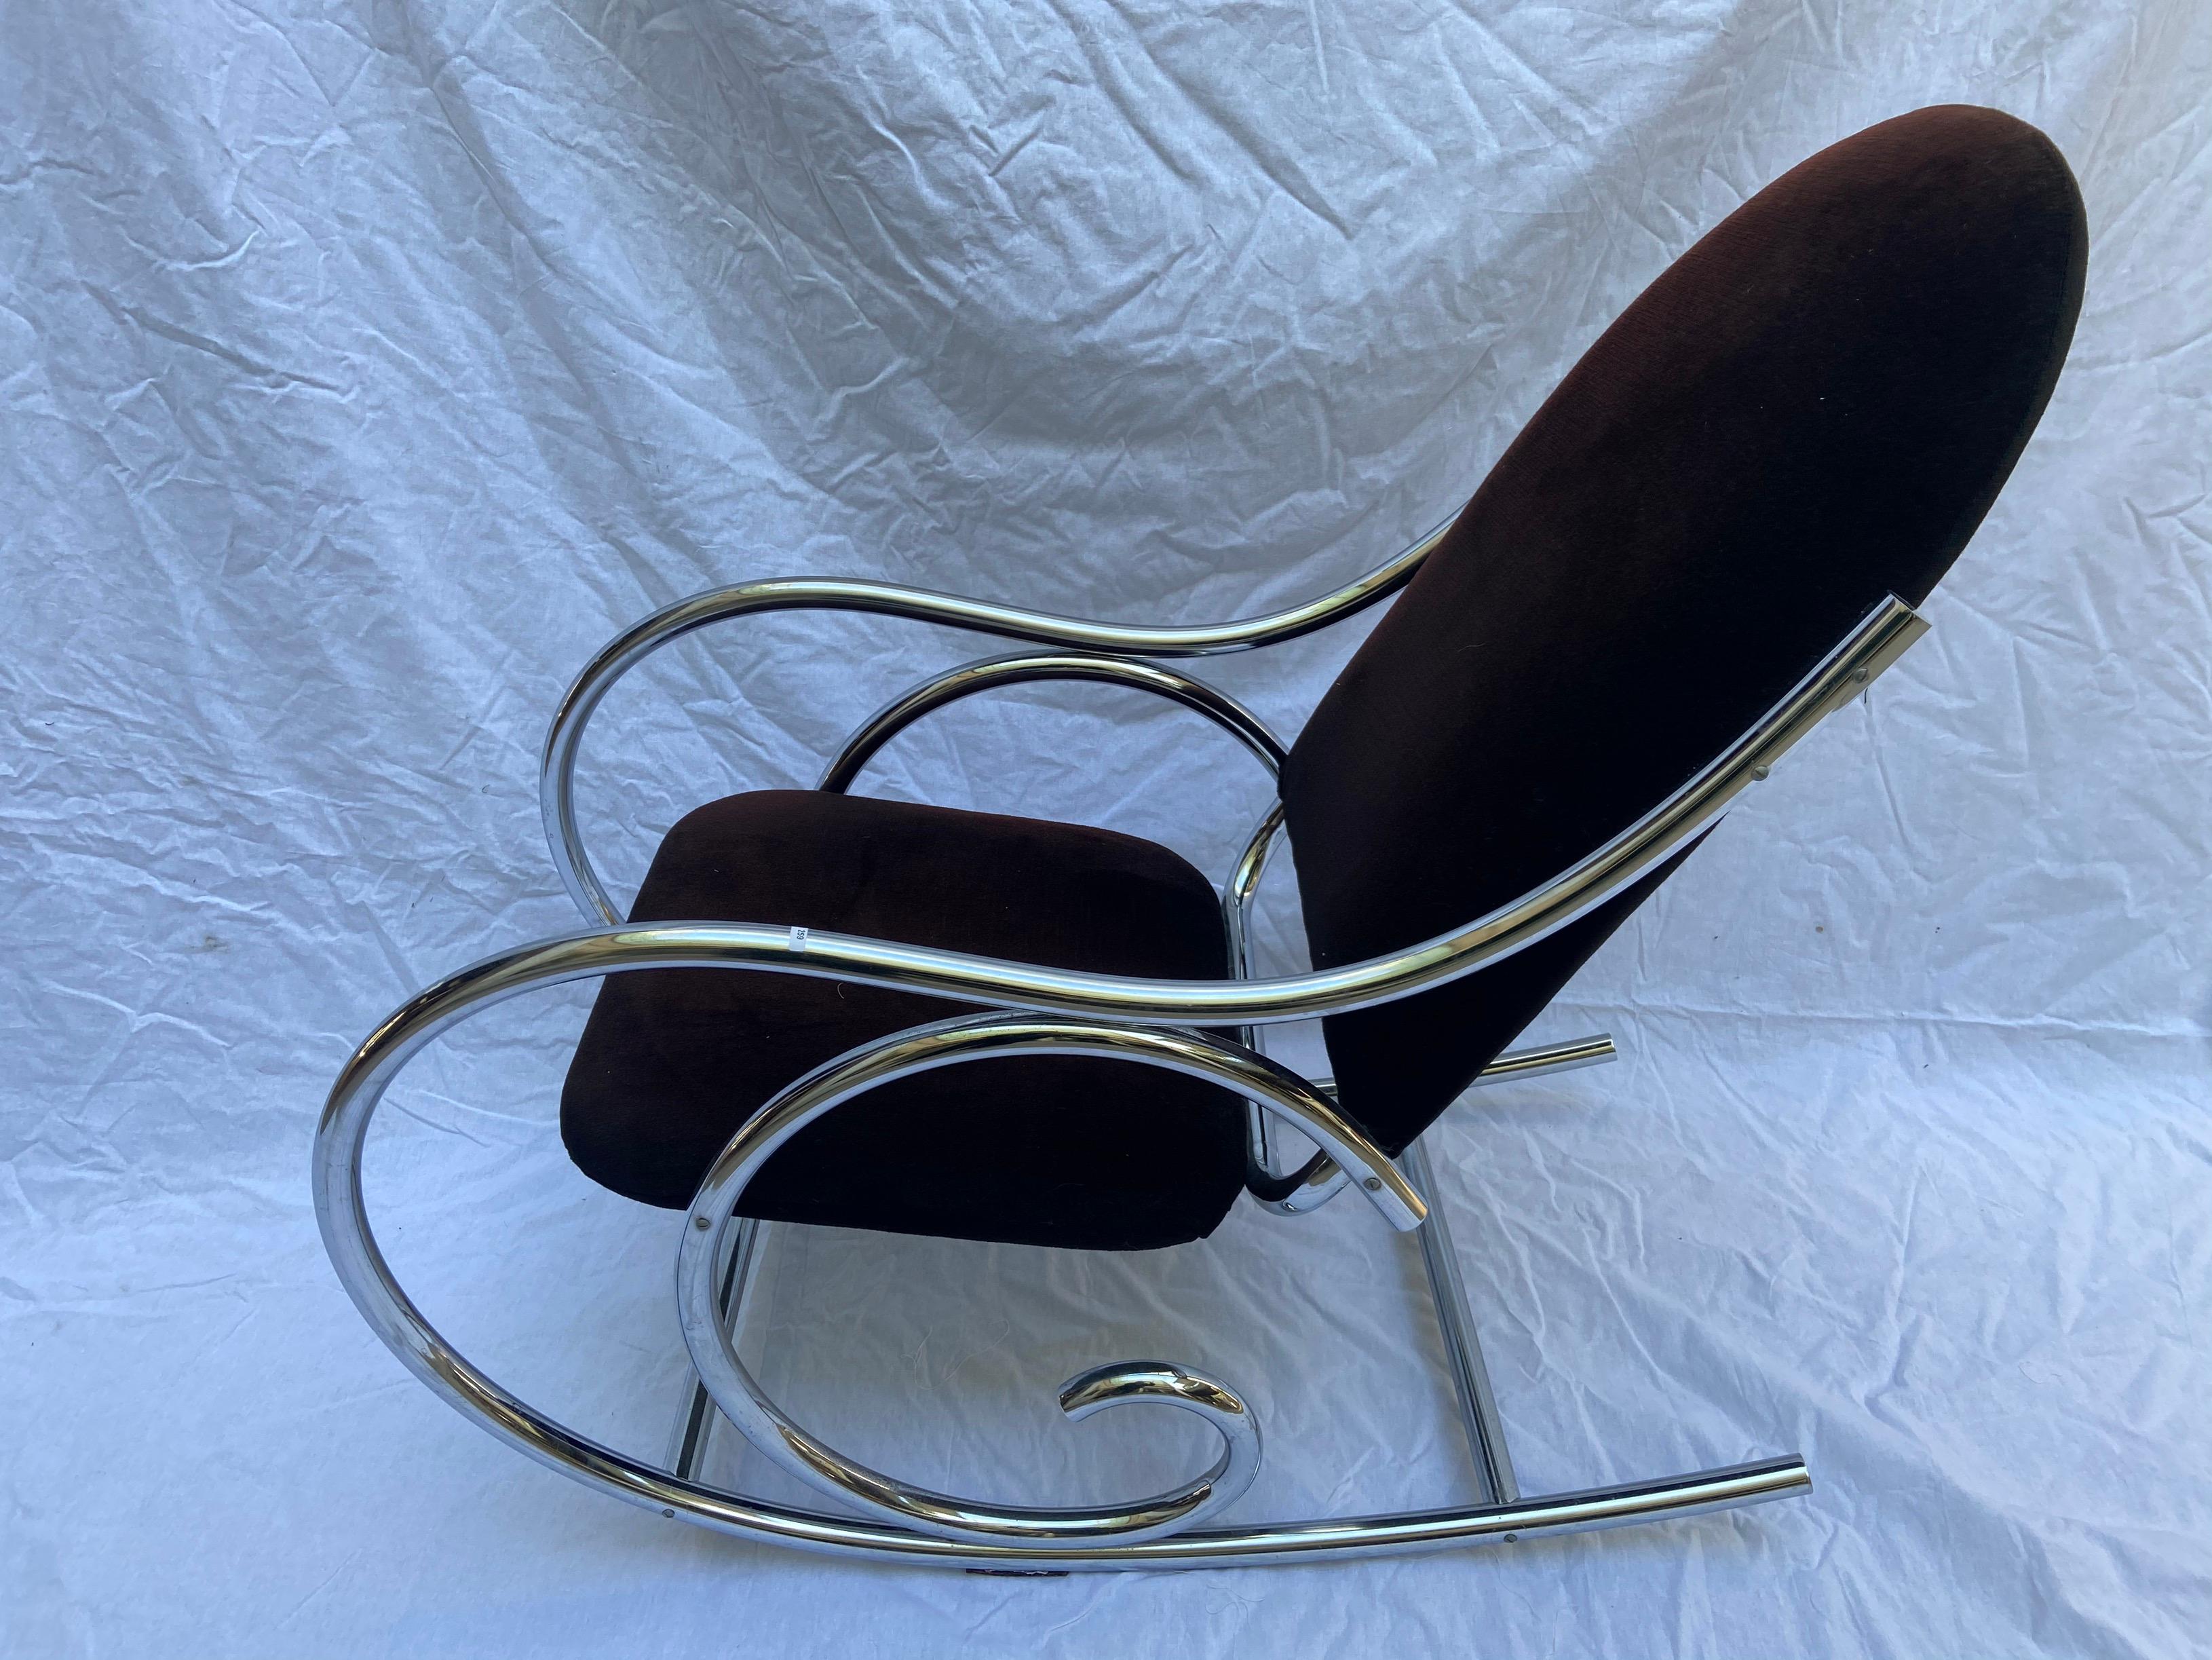 Brown velvet armchair / rocking chair, Travail Francais
Circa 1975
Velvet and chromed tubular metal

Measures: H 103 x L 56 x P 110 cm 

Seat height: 44 cm.